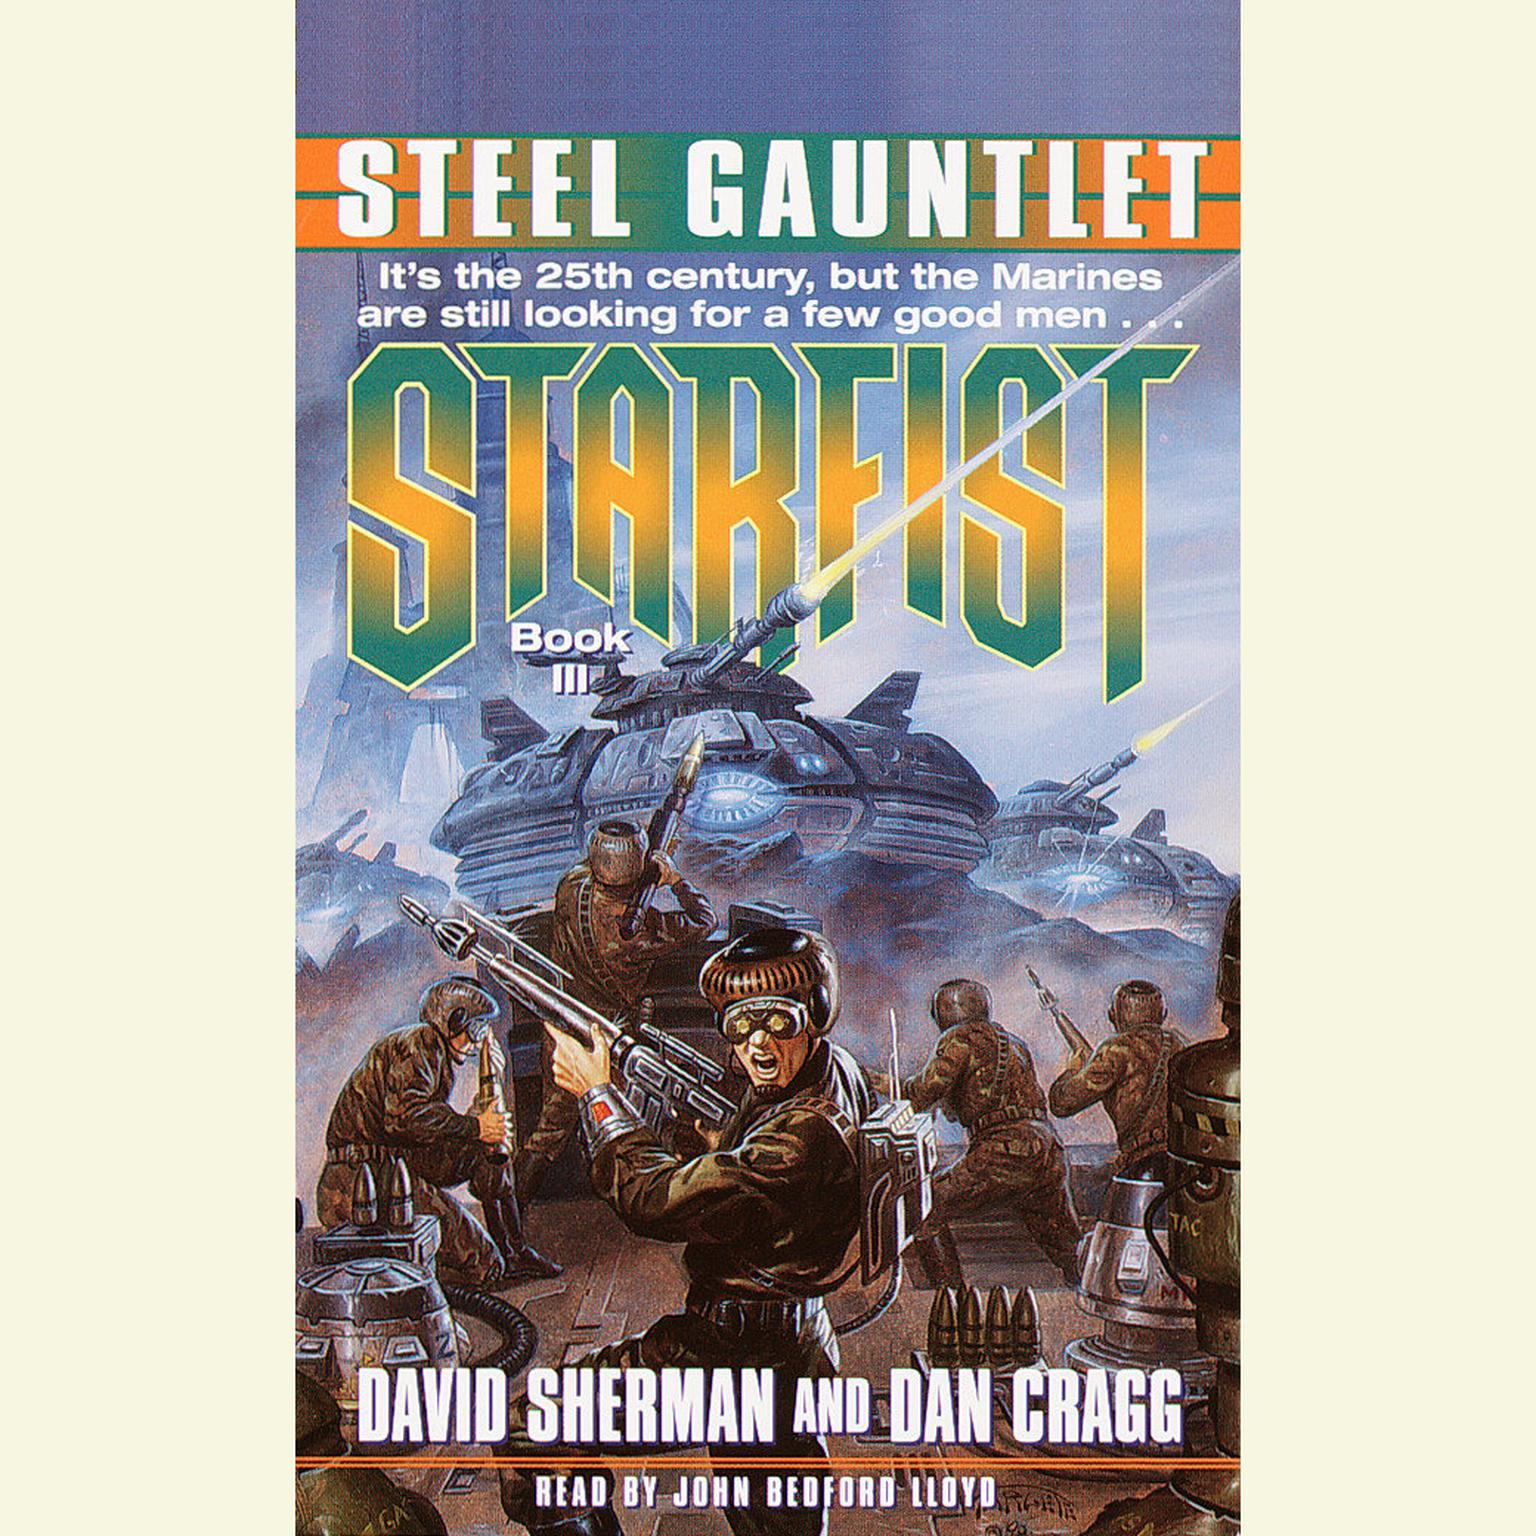 Starfist: Steel Gauntlet (Abridged): Starfist, Book III Audiobook, by David Sherman